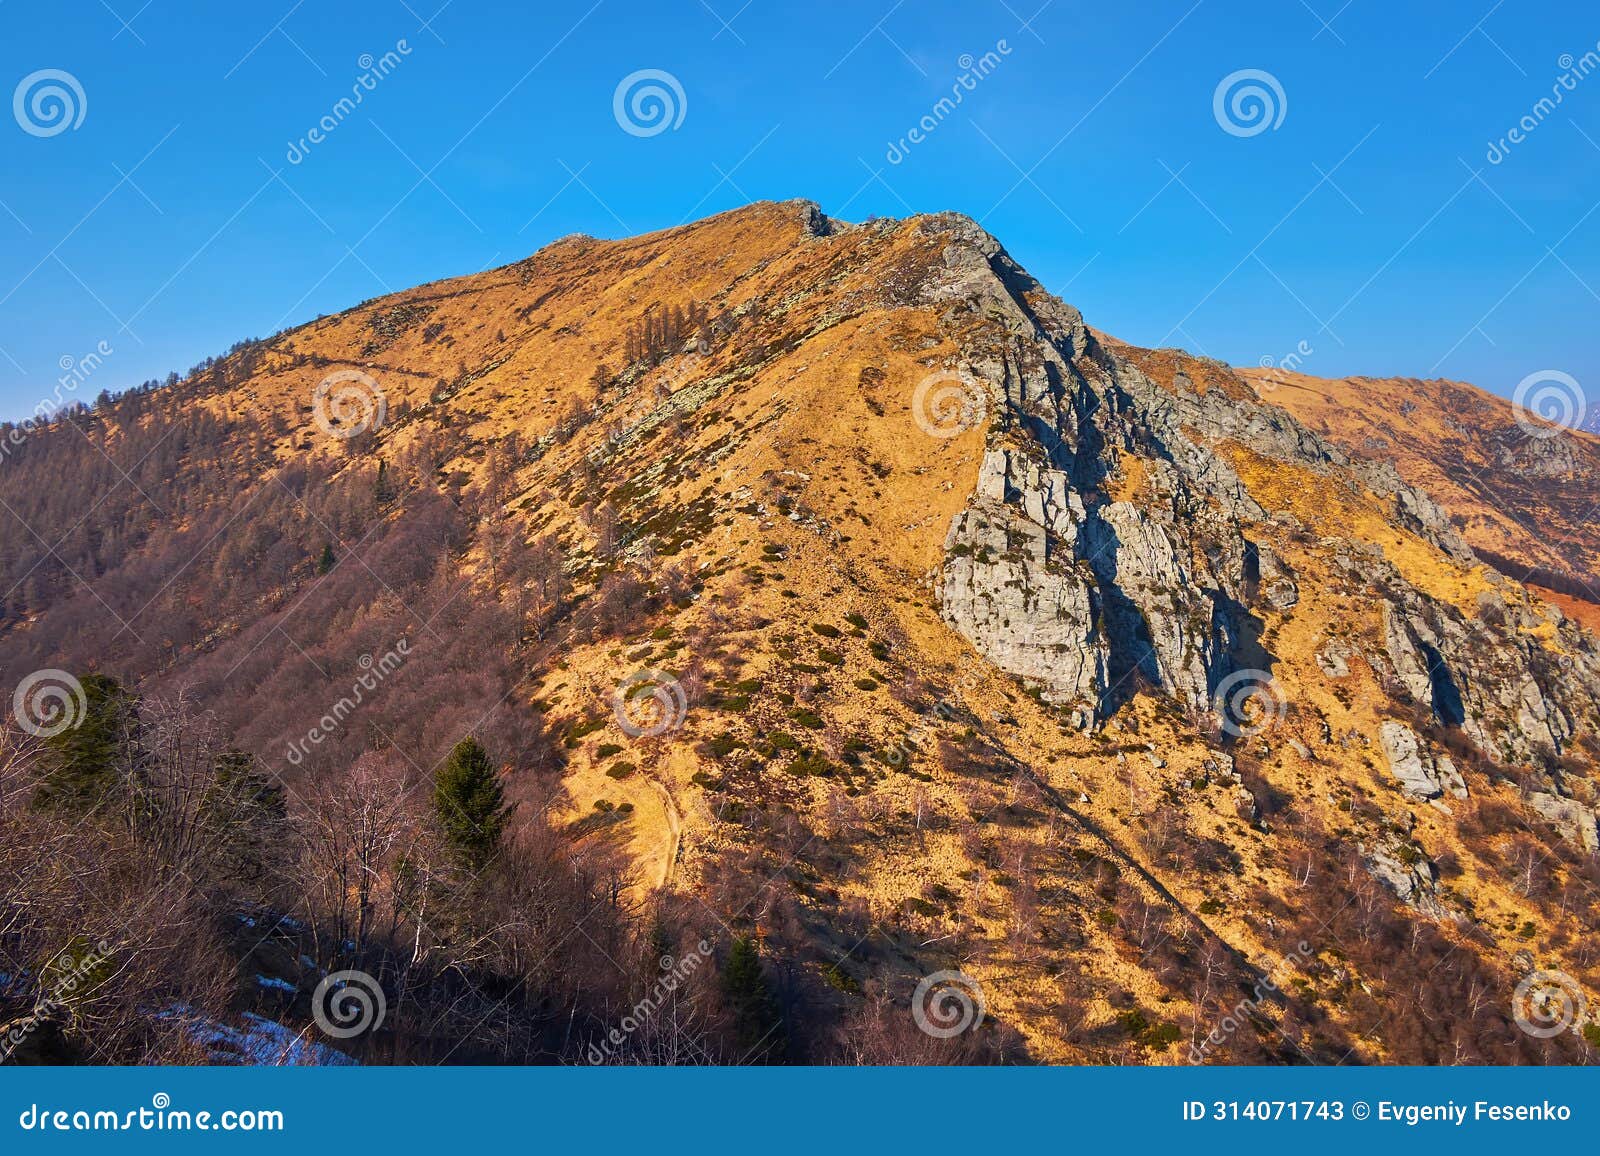 the rocky cima madone, ticino, switzerland